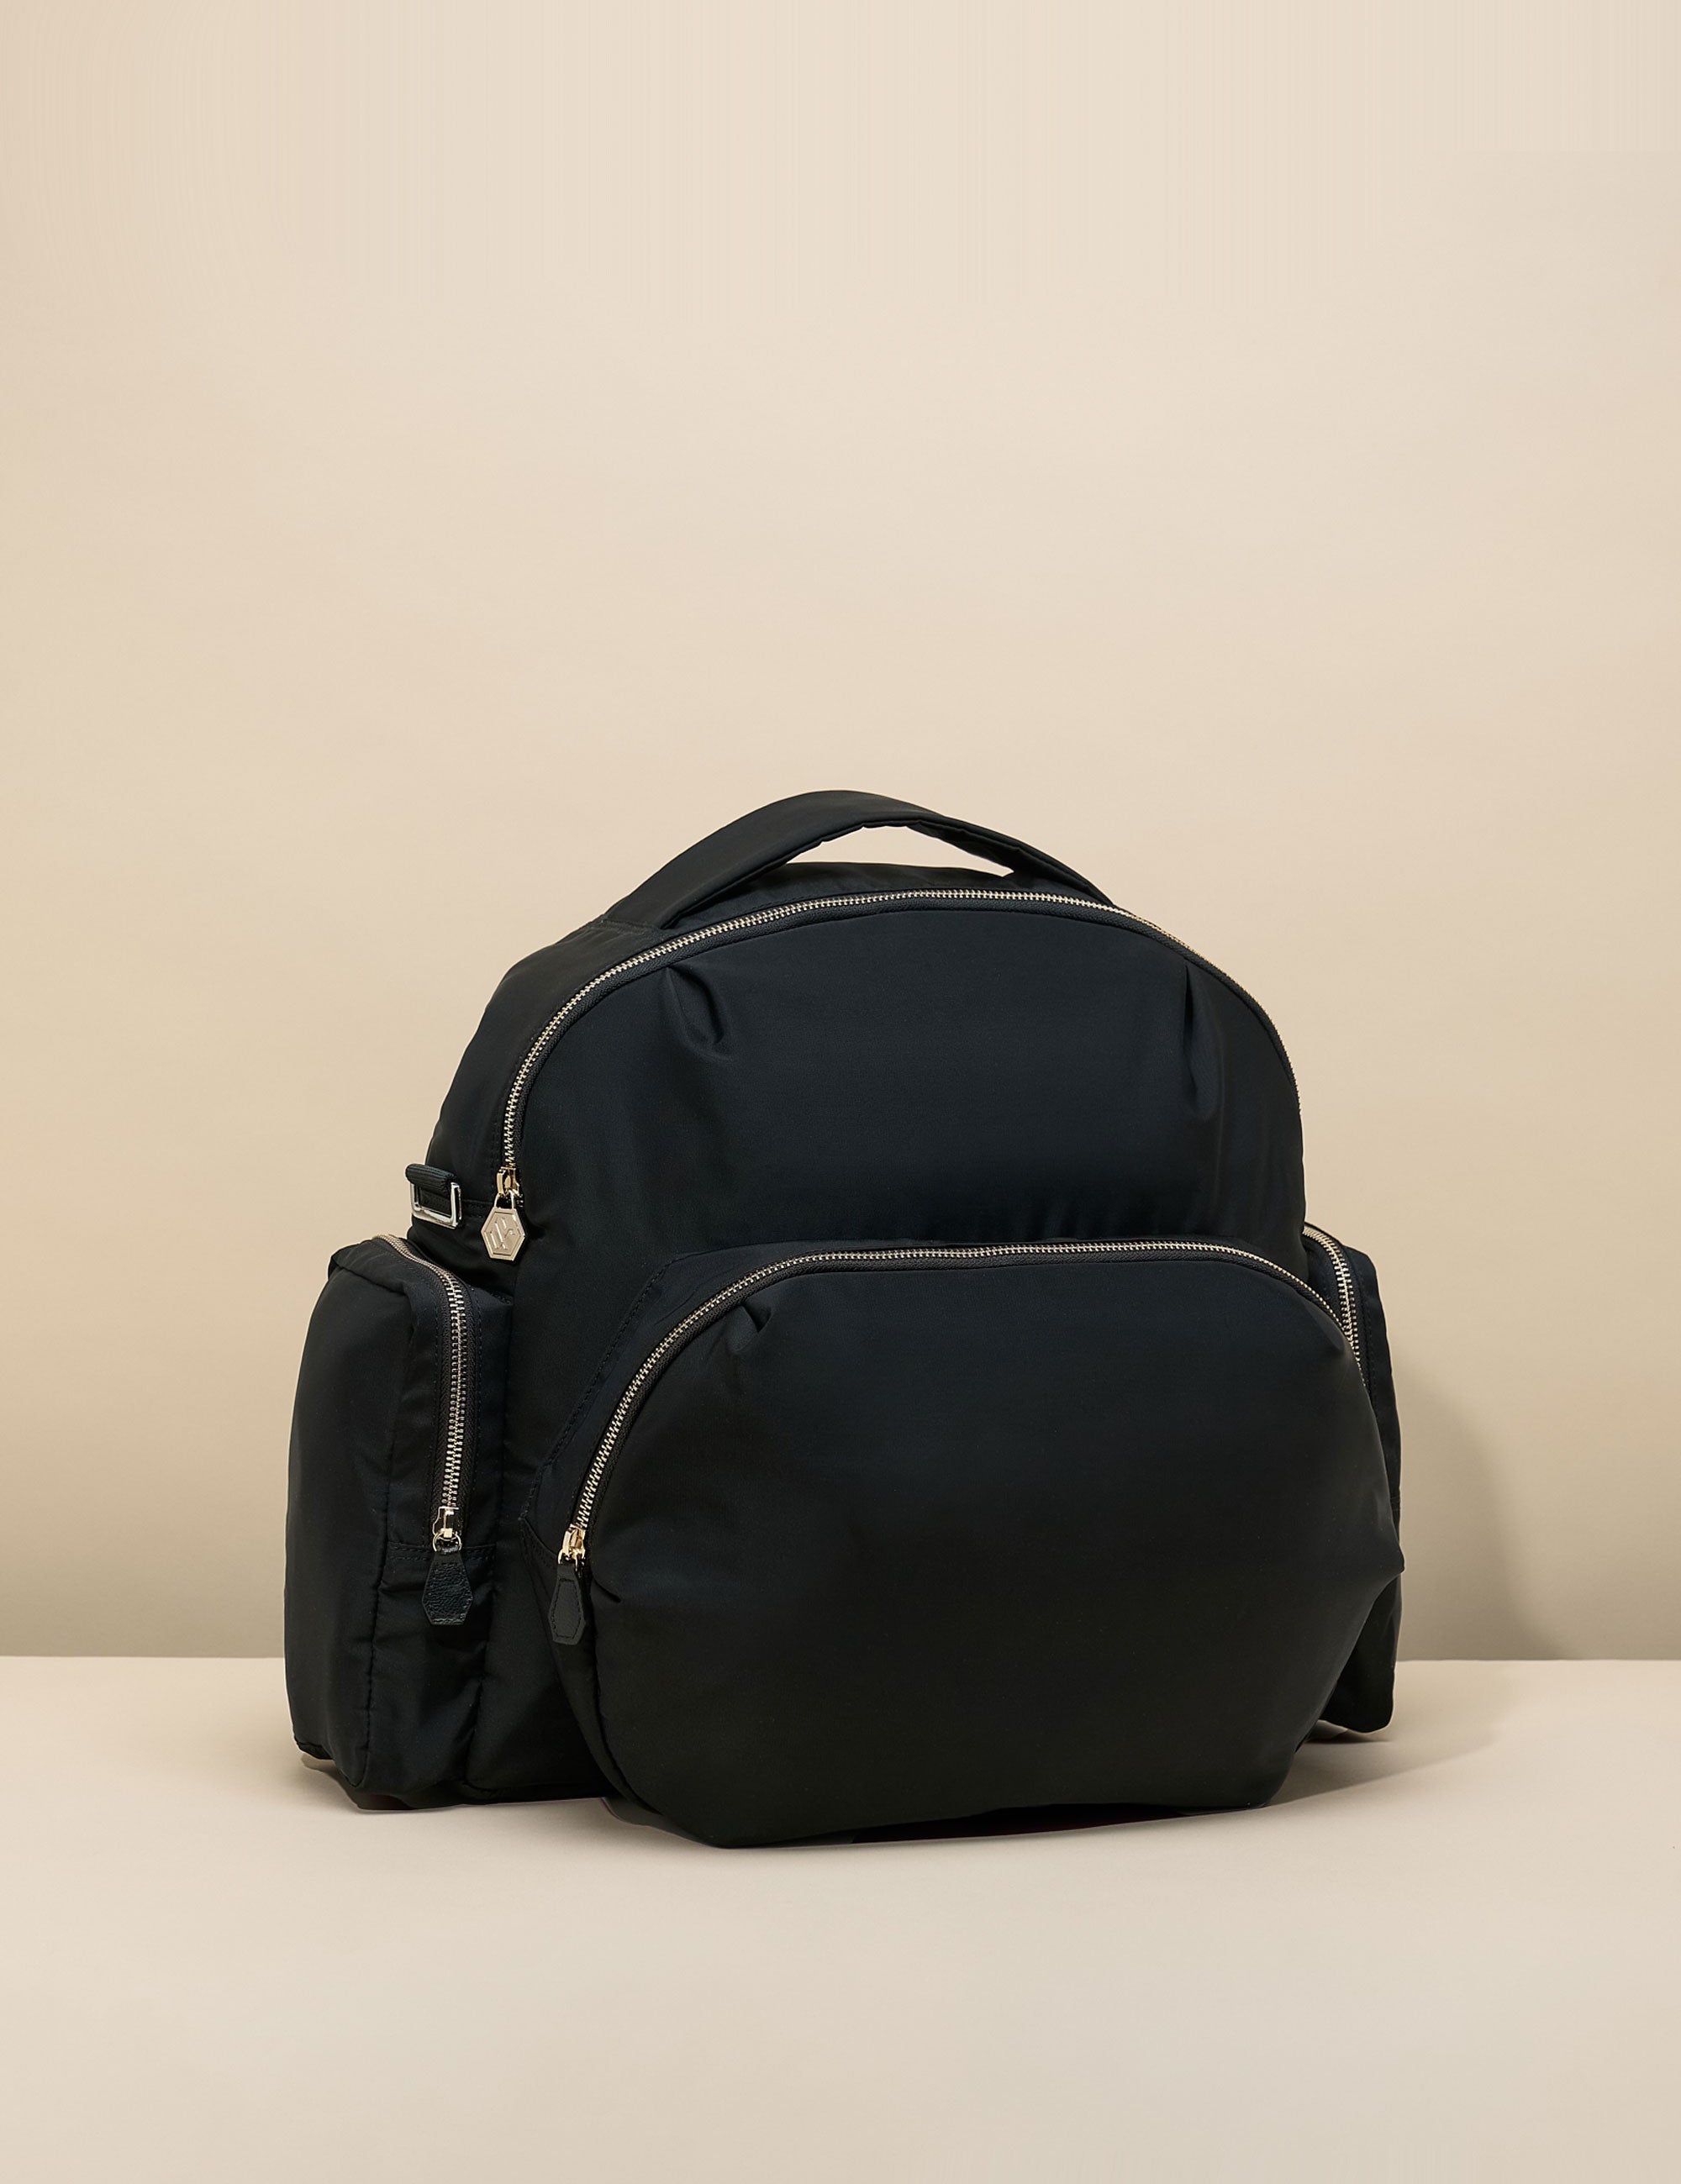 black smart backpack for travel